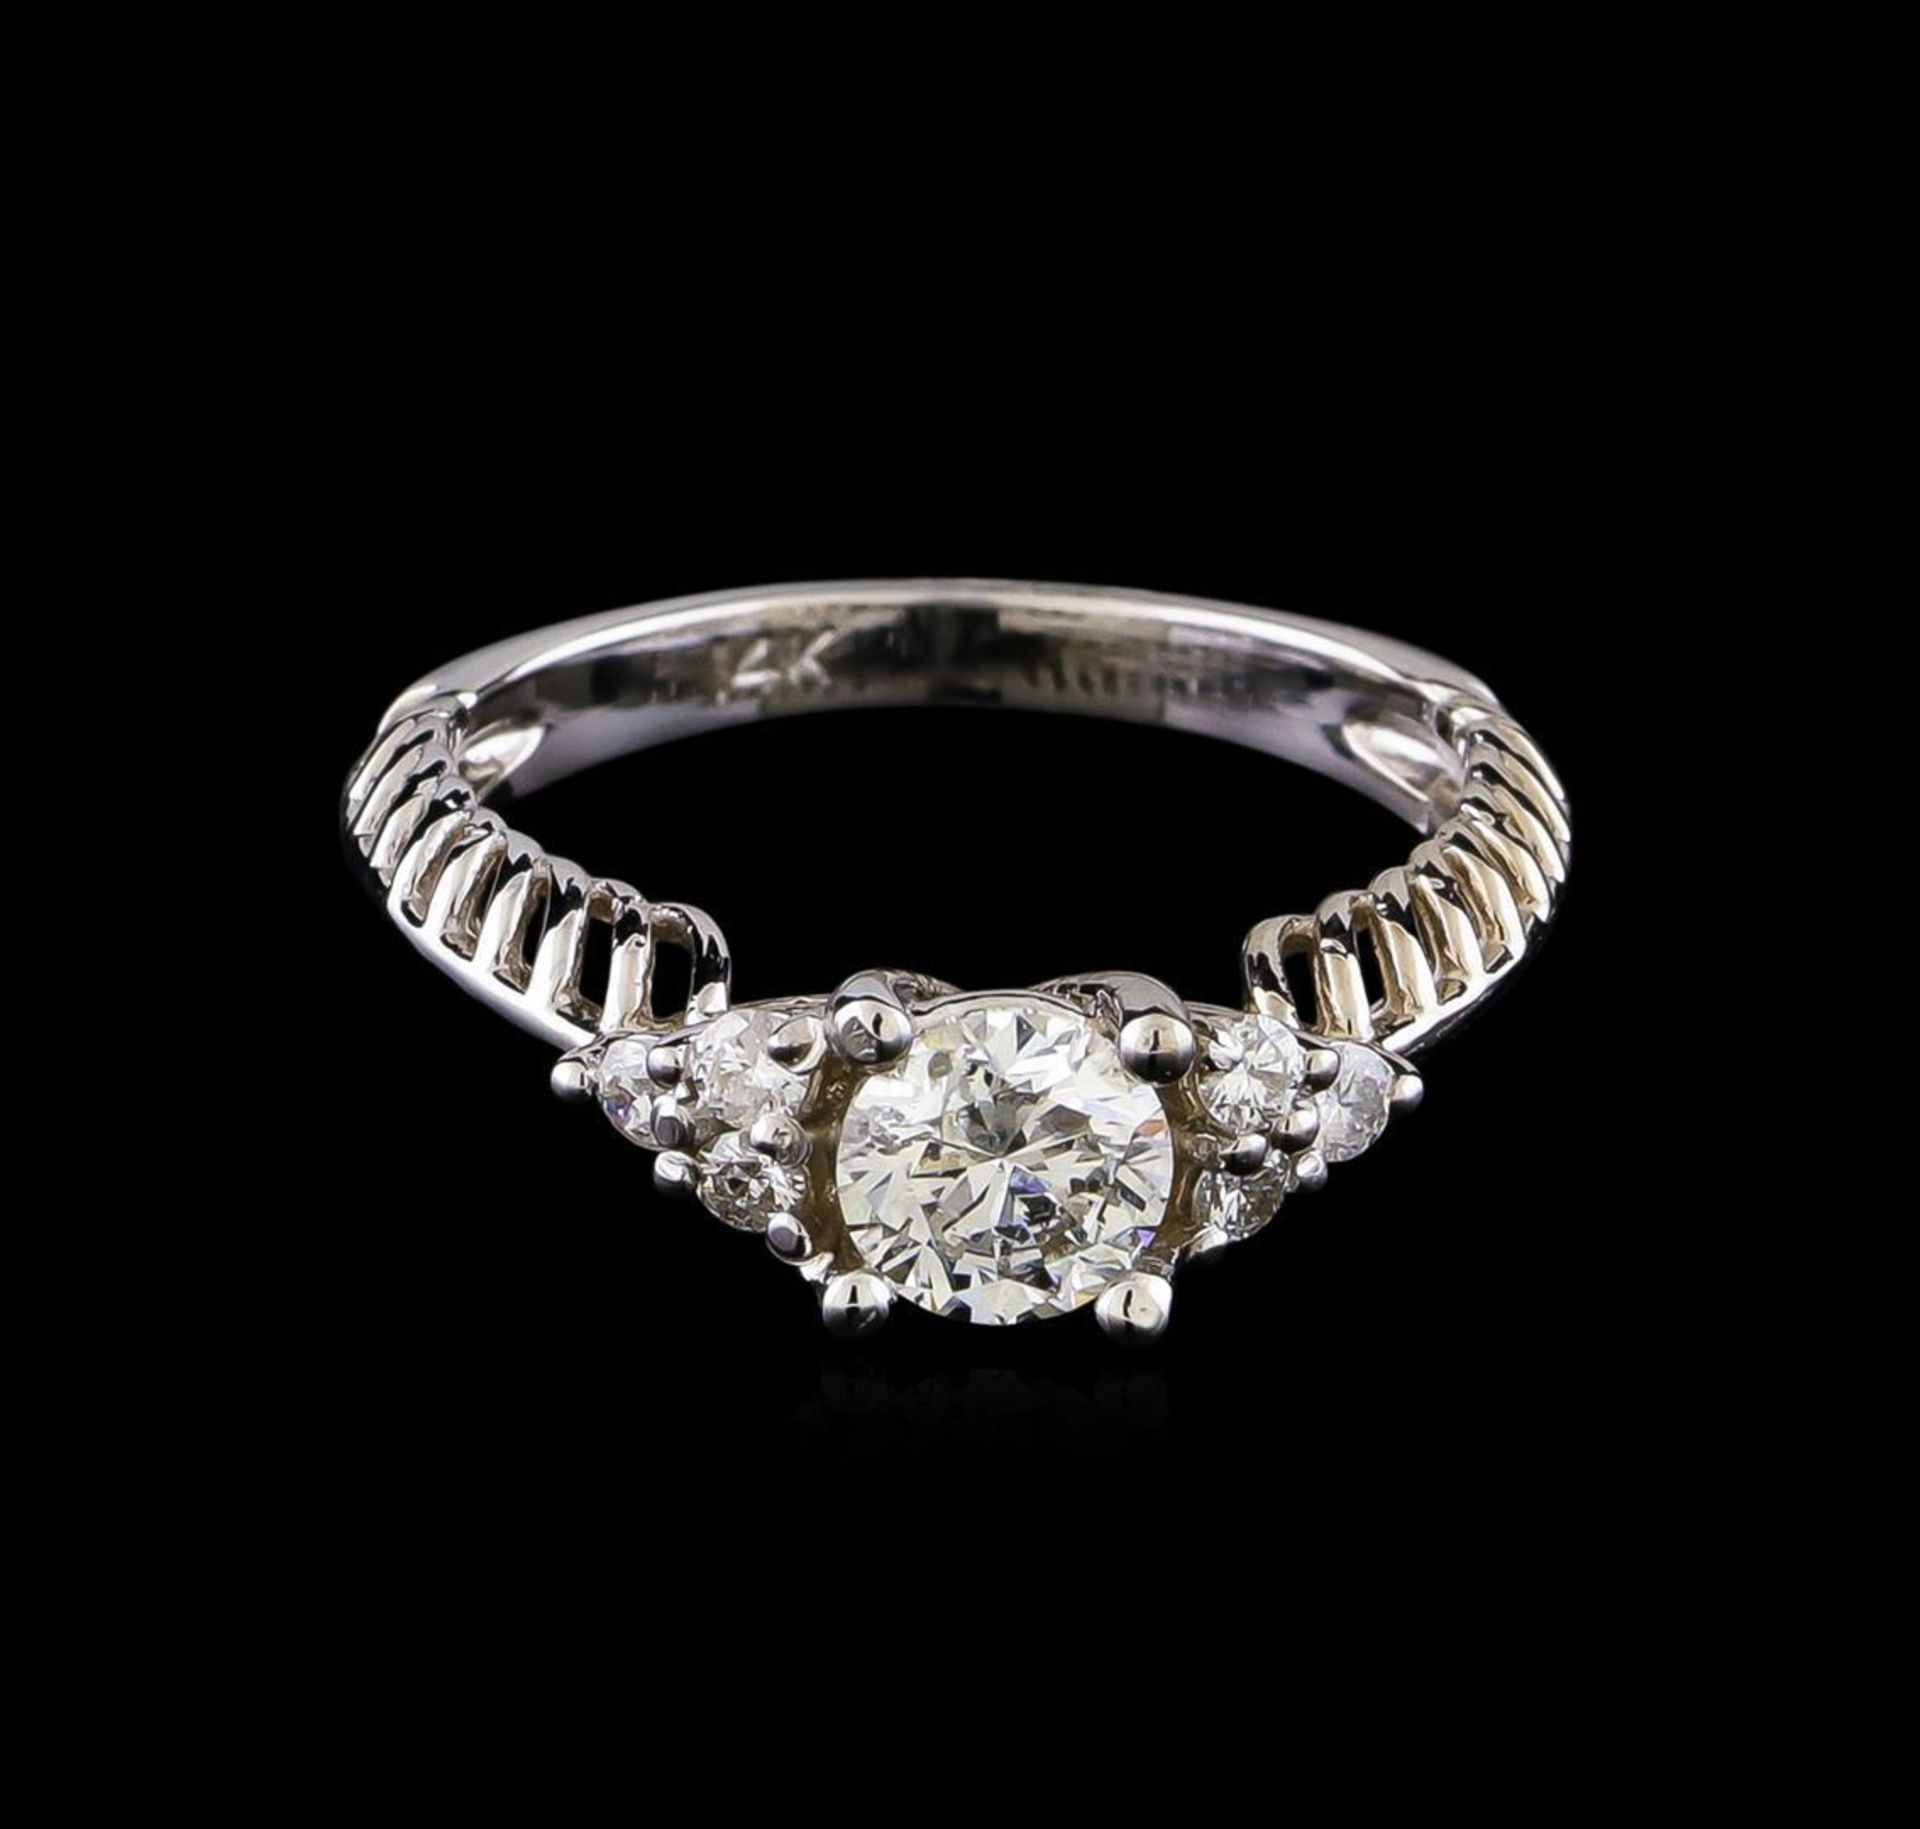 0.90 ctw Diamond Ring - 14KT White Gold - Image 2 of 5